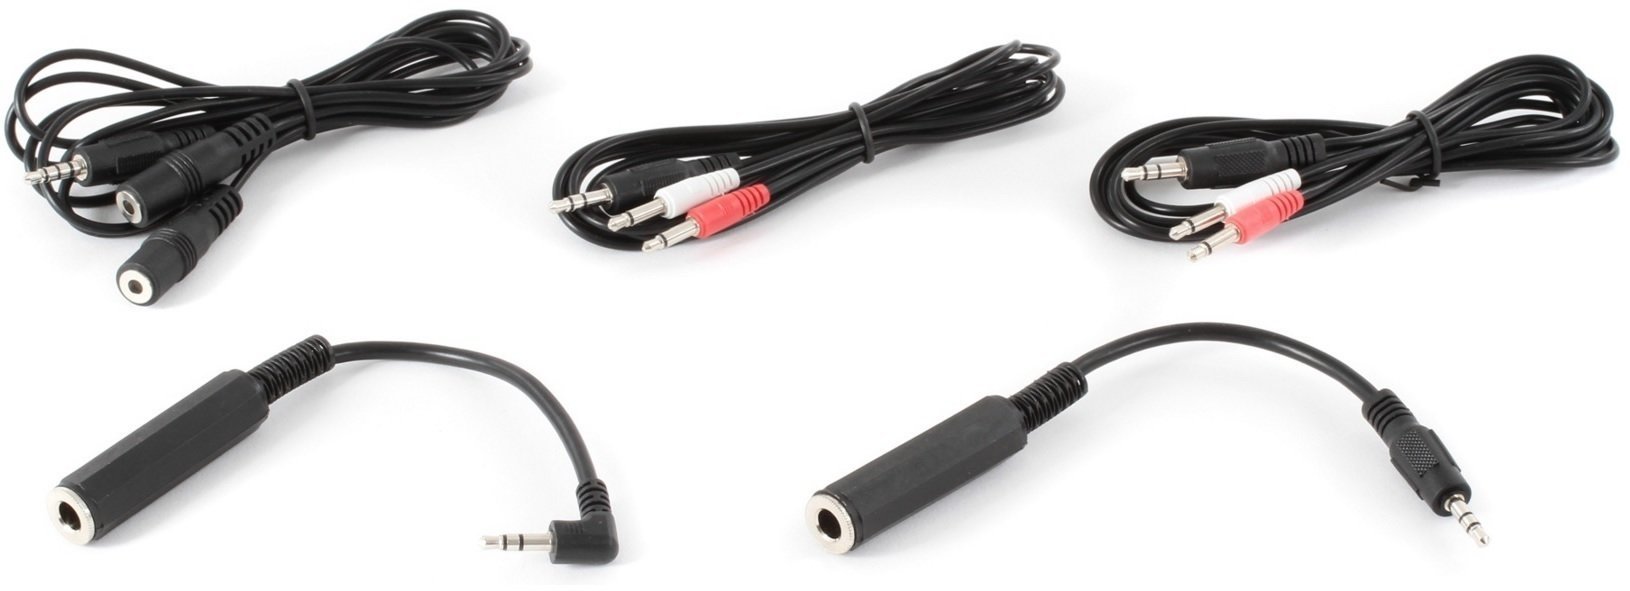 Câble Audio Keith McMillen CV Cable Kit